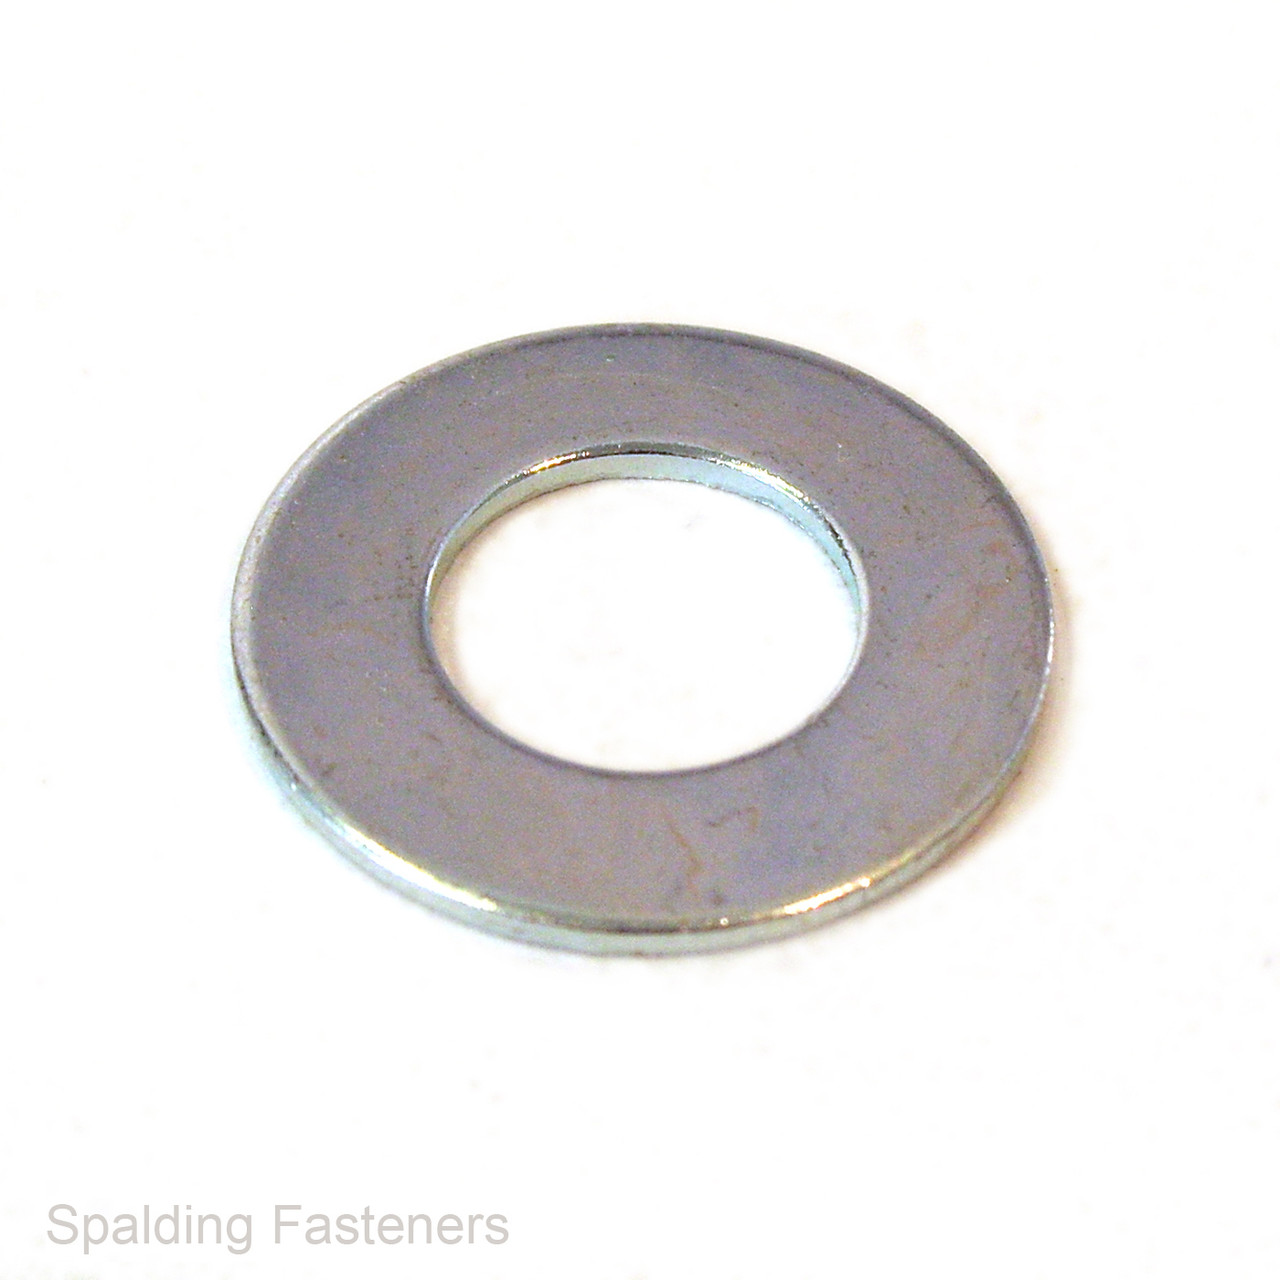 Assorted M5 Metric Stainless Steel Socket Cap Screws, Nuts & Washers